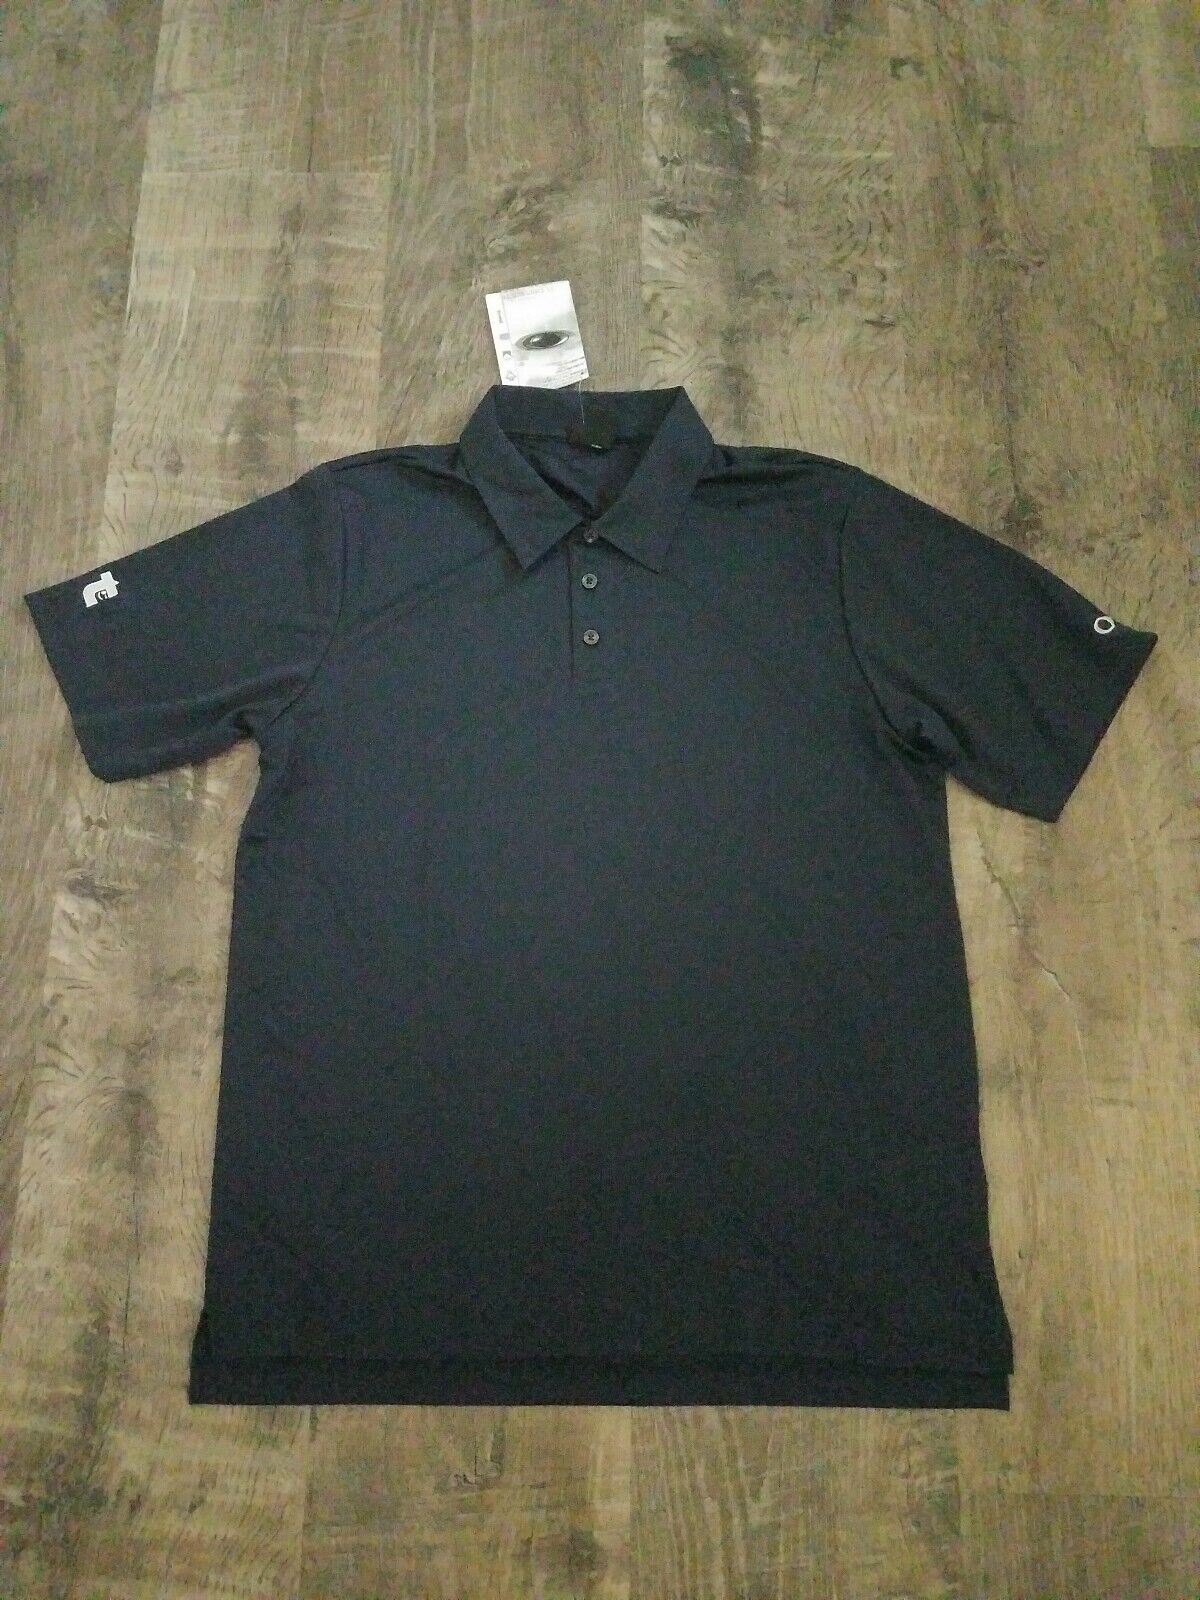 Oakley nwt lightweight black hawaii times exclusive golf polo shirt sz large